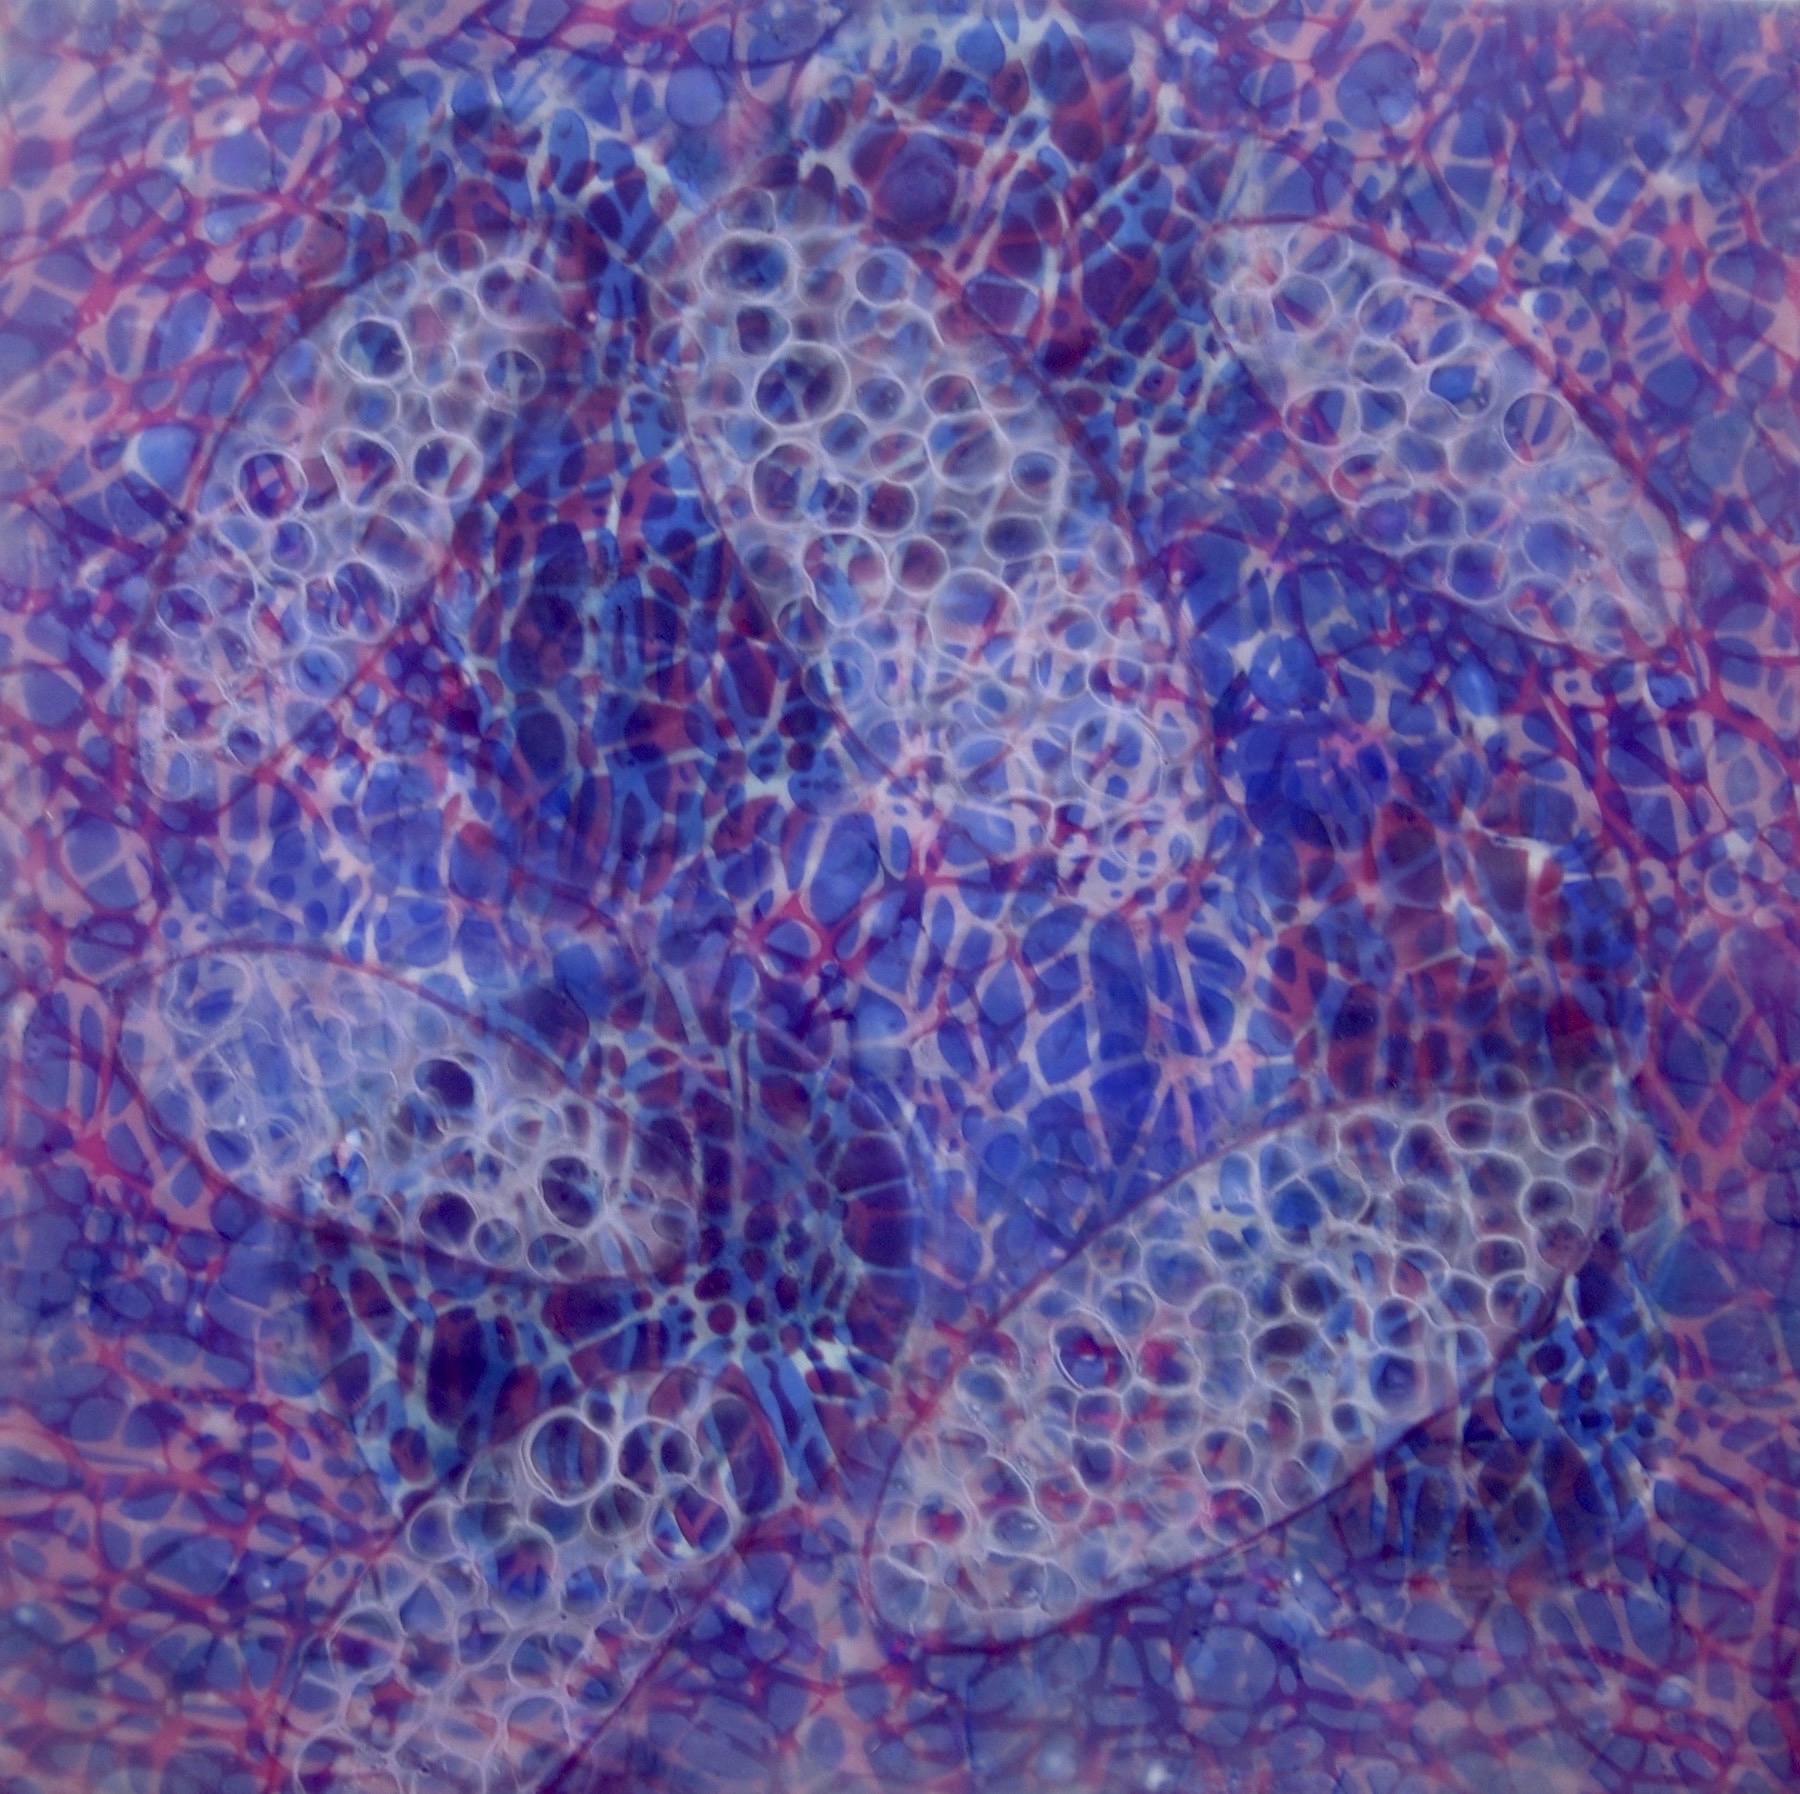 "Bio Patterns 9", encaustic, pastel, abstract, microscopic, purple, blue, white